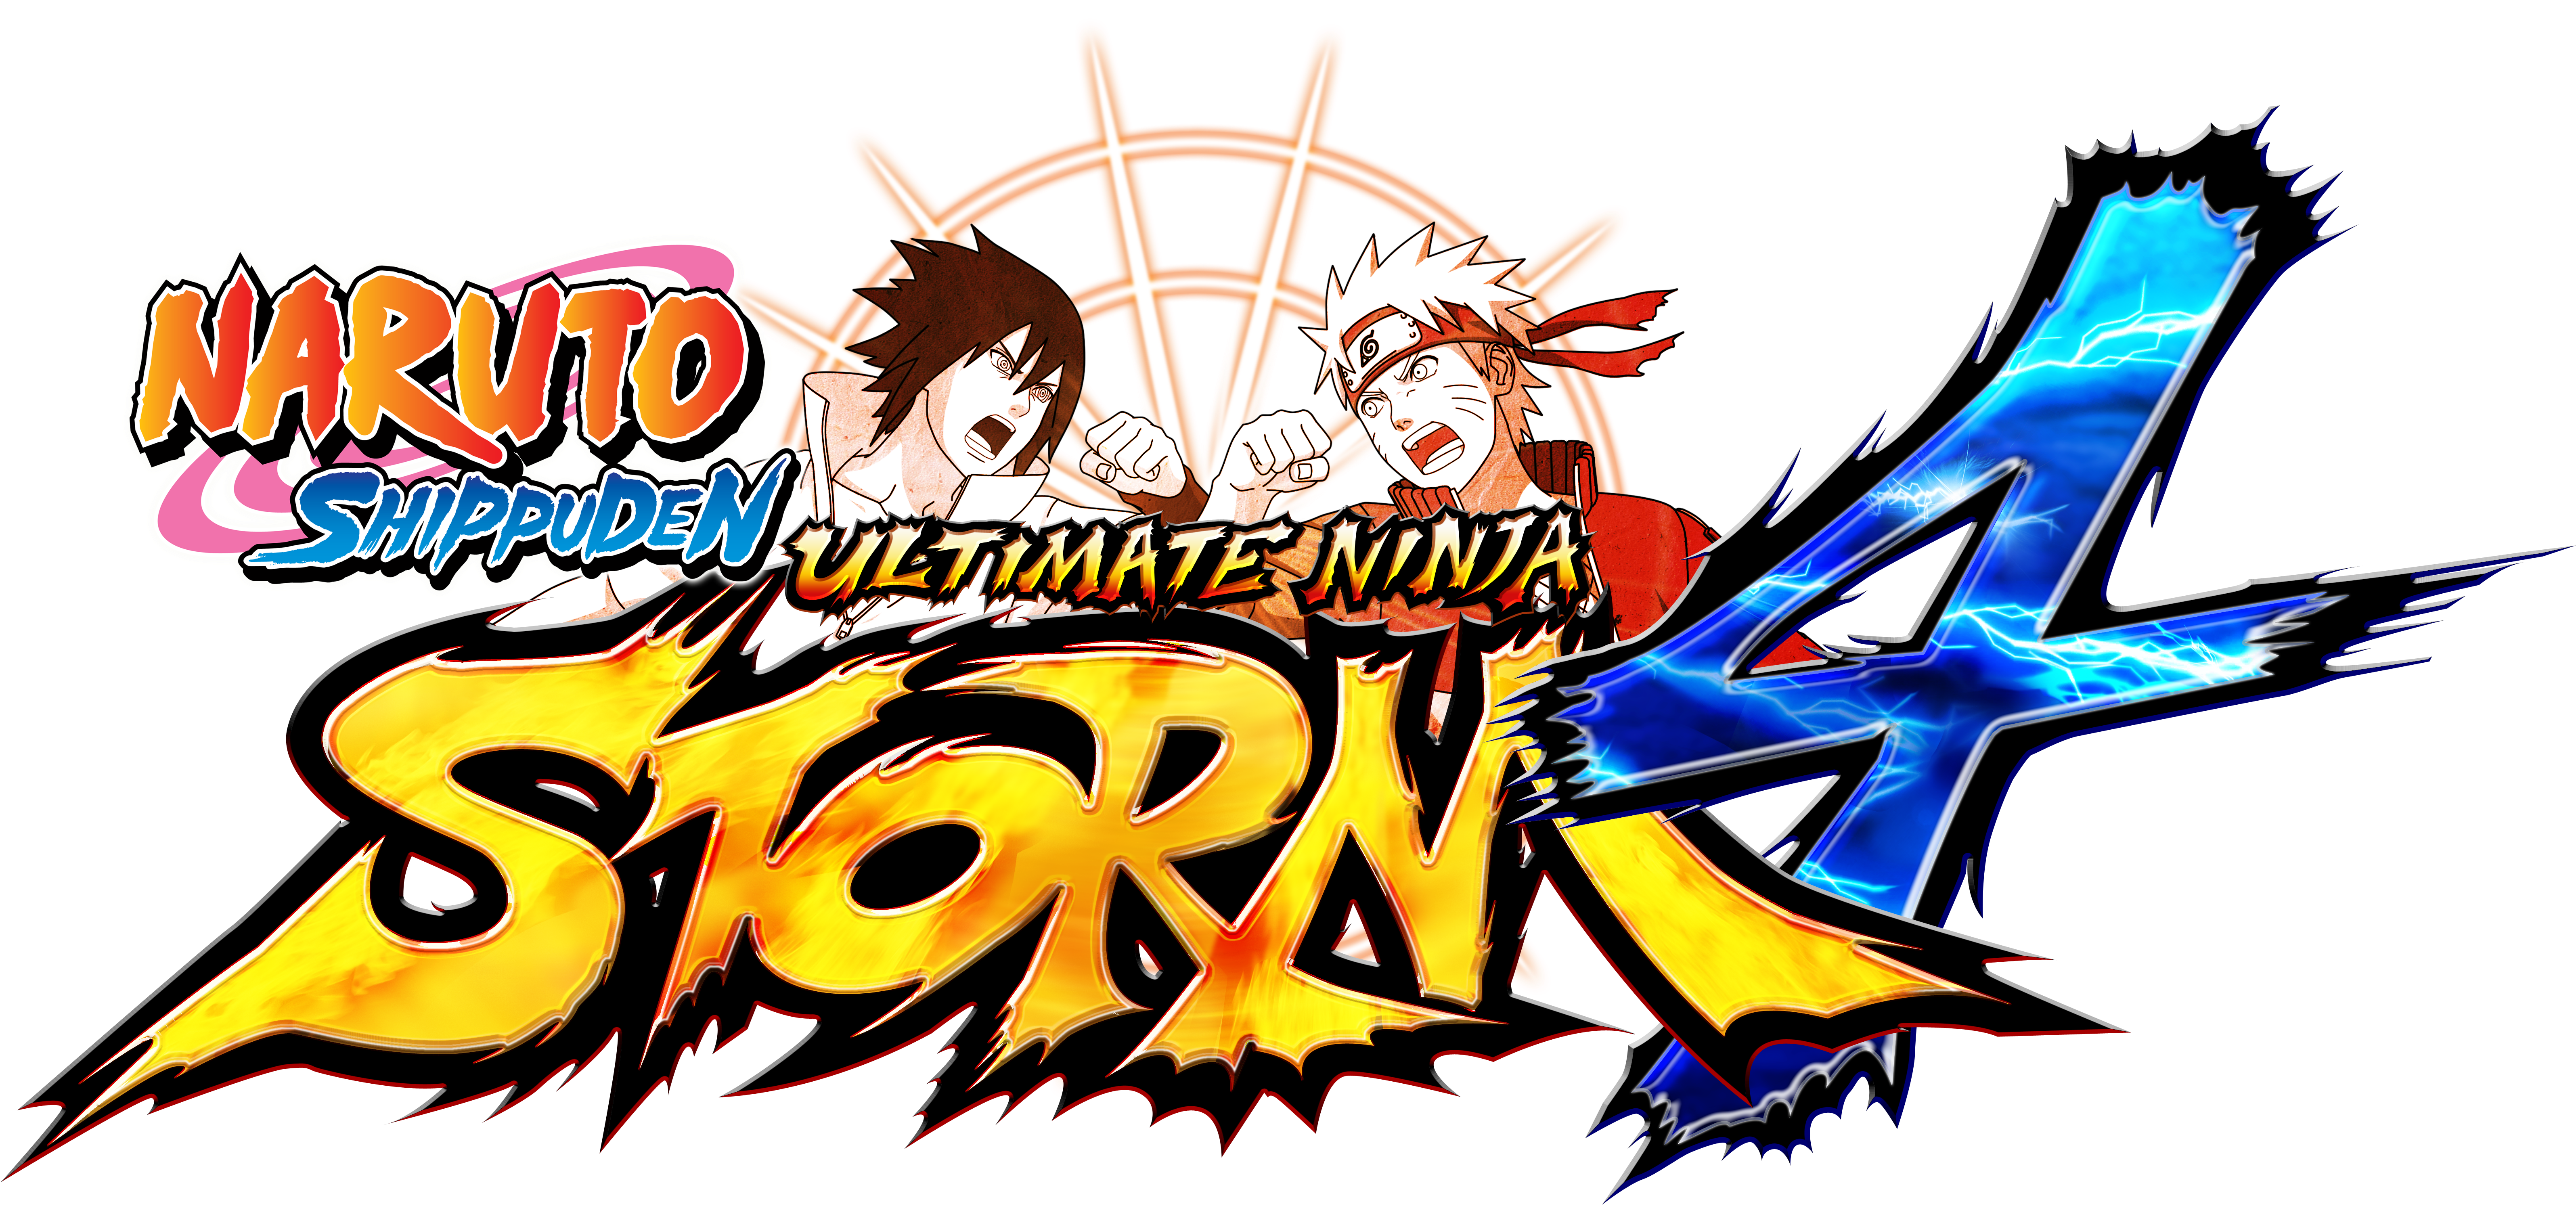 Bandai Namco Entertainment Release Date - Naruto Shippuden Ultimate Ninja Storm 4 Road (6740x3614)